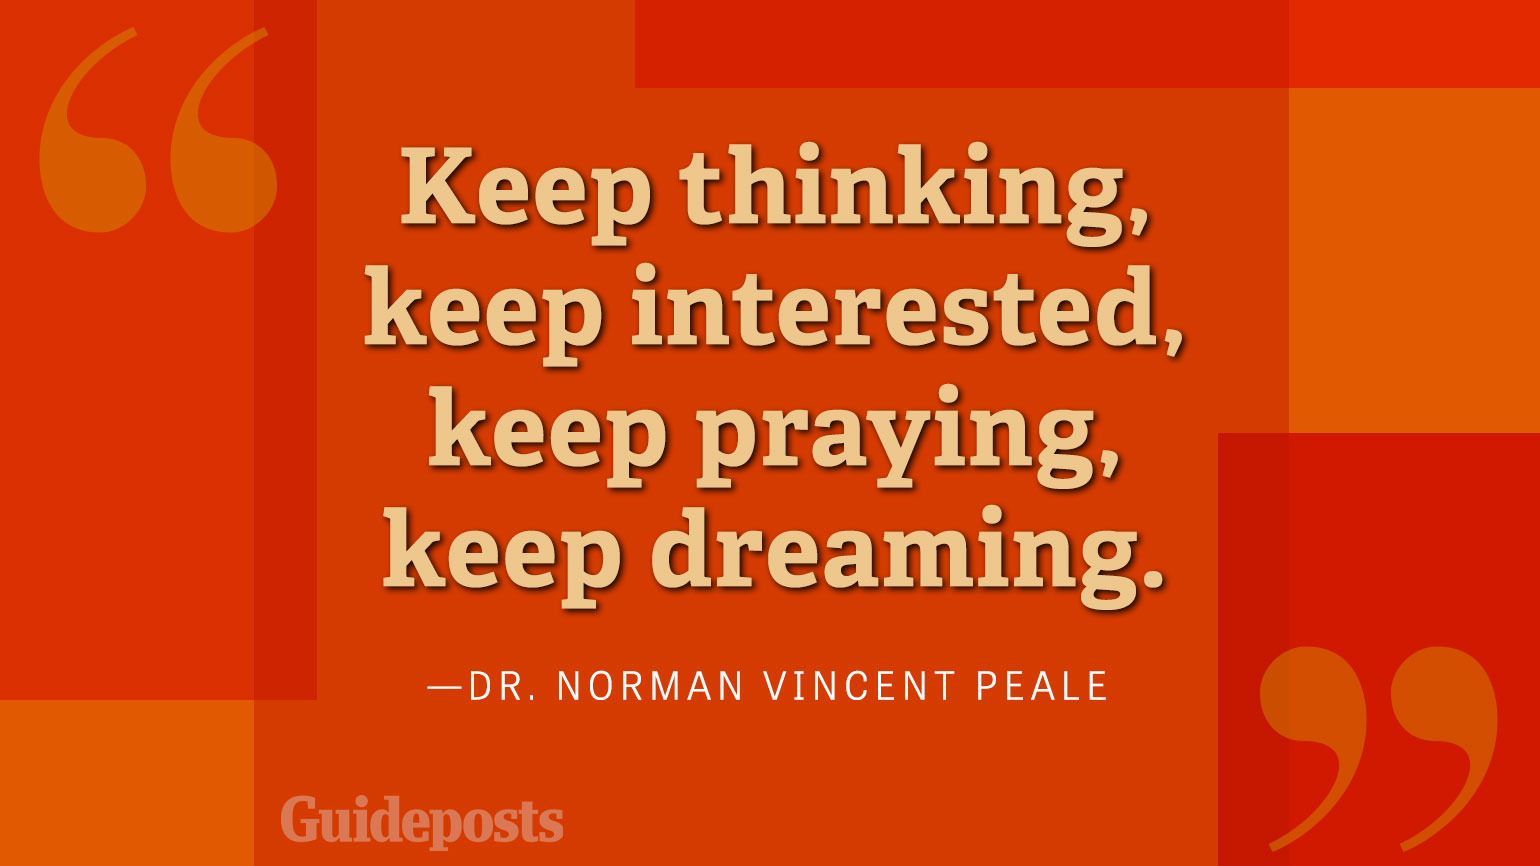 Keep thinking, keep interested, keep praying, keep dreaming.